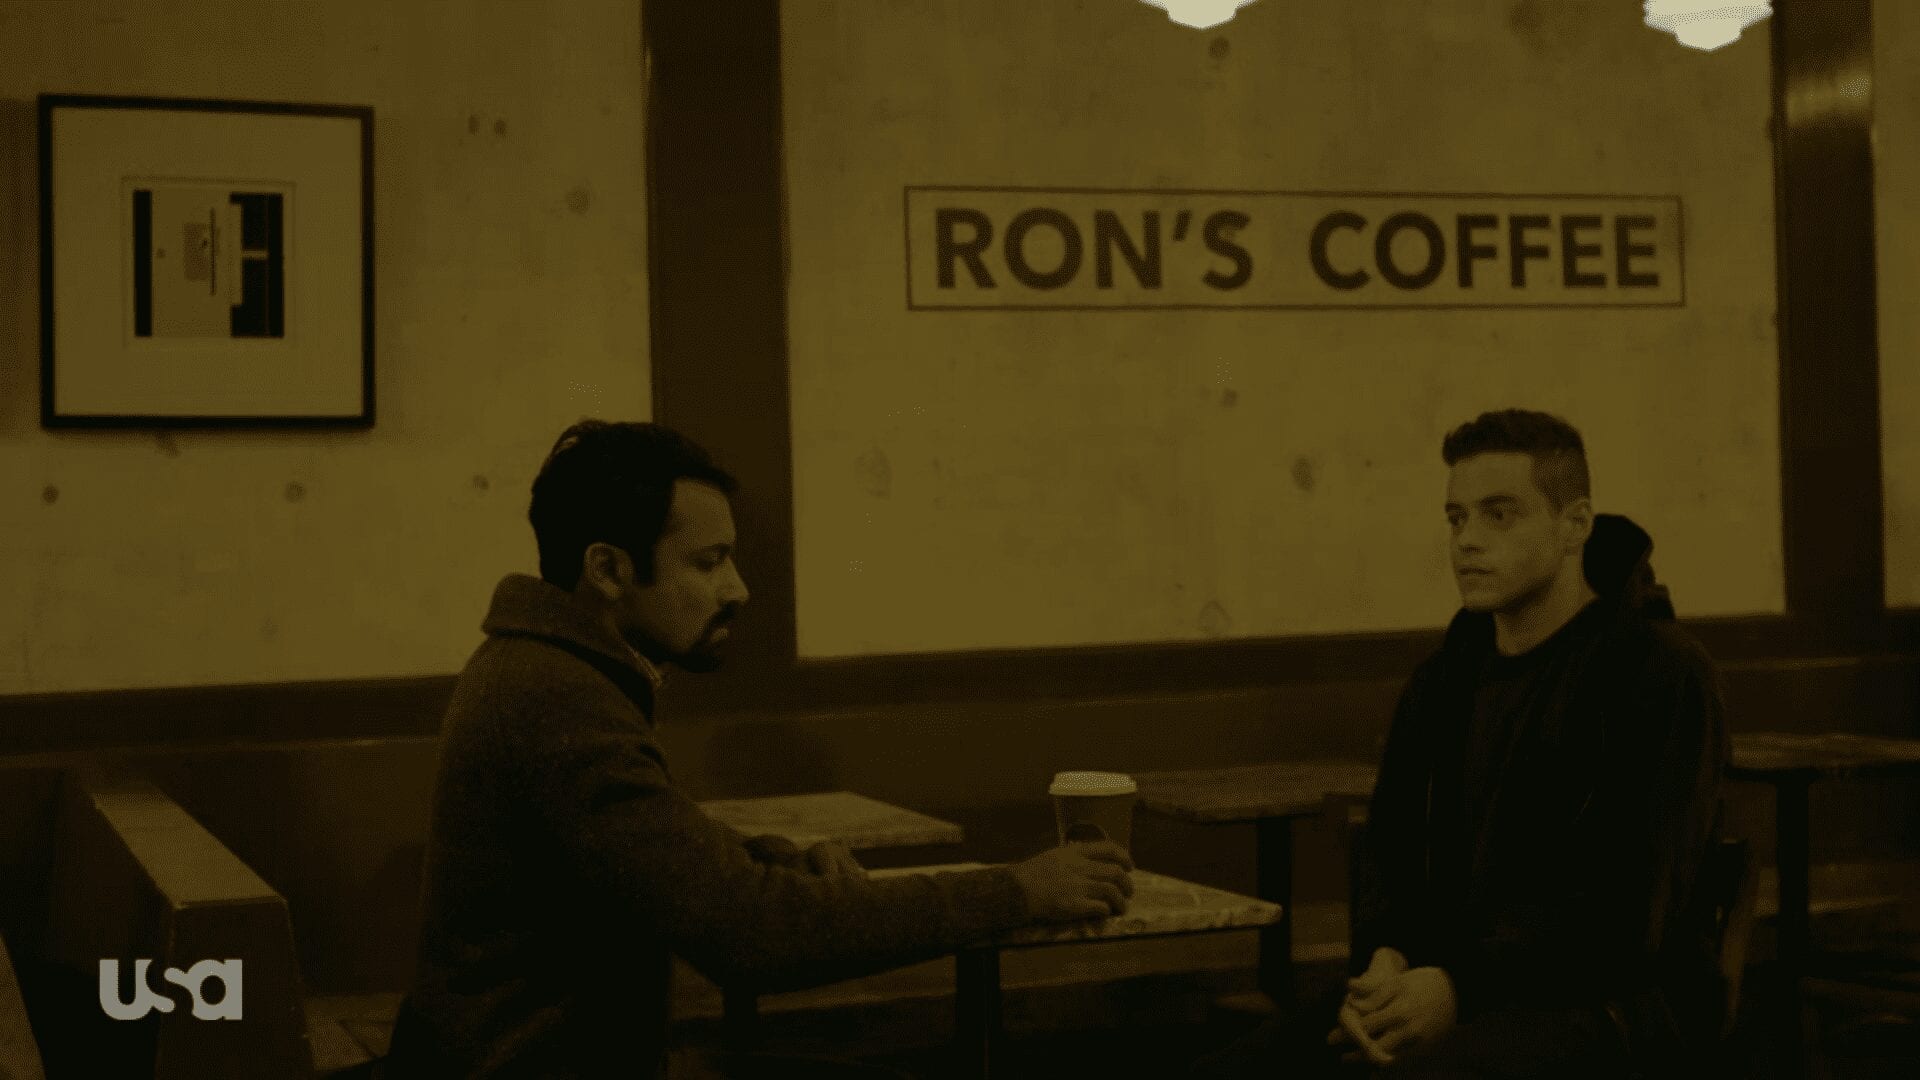 Rons_coffee